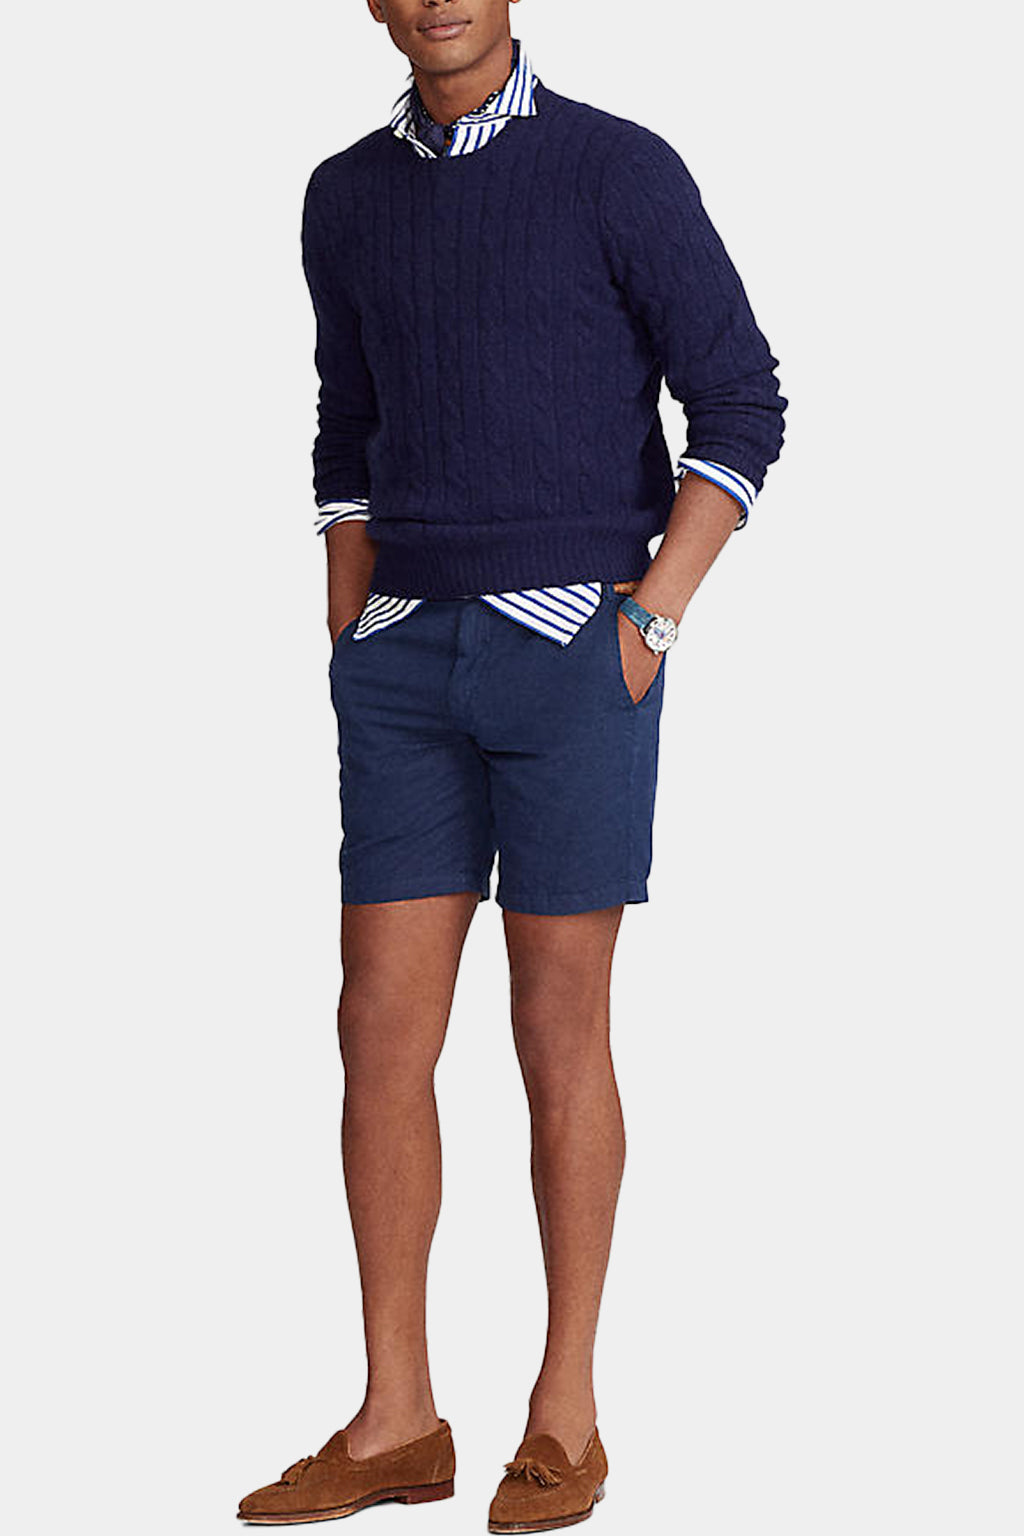 Ralph Lauren - Bermuda Shorts